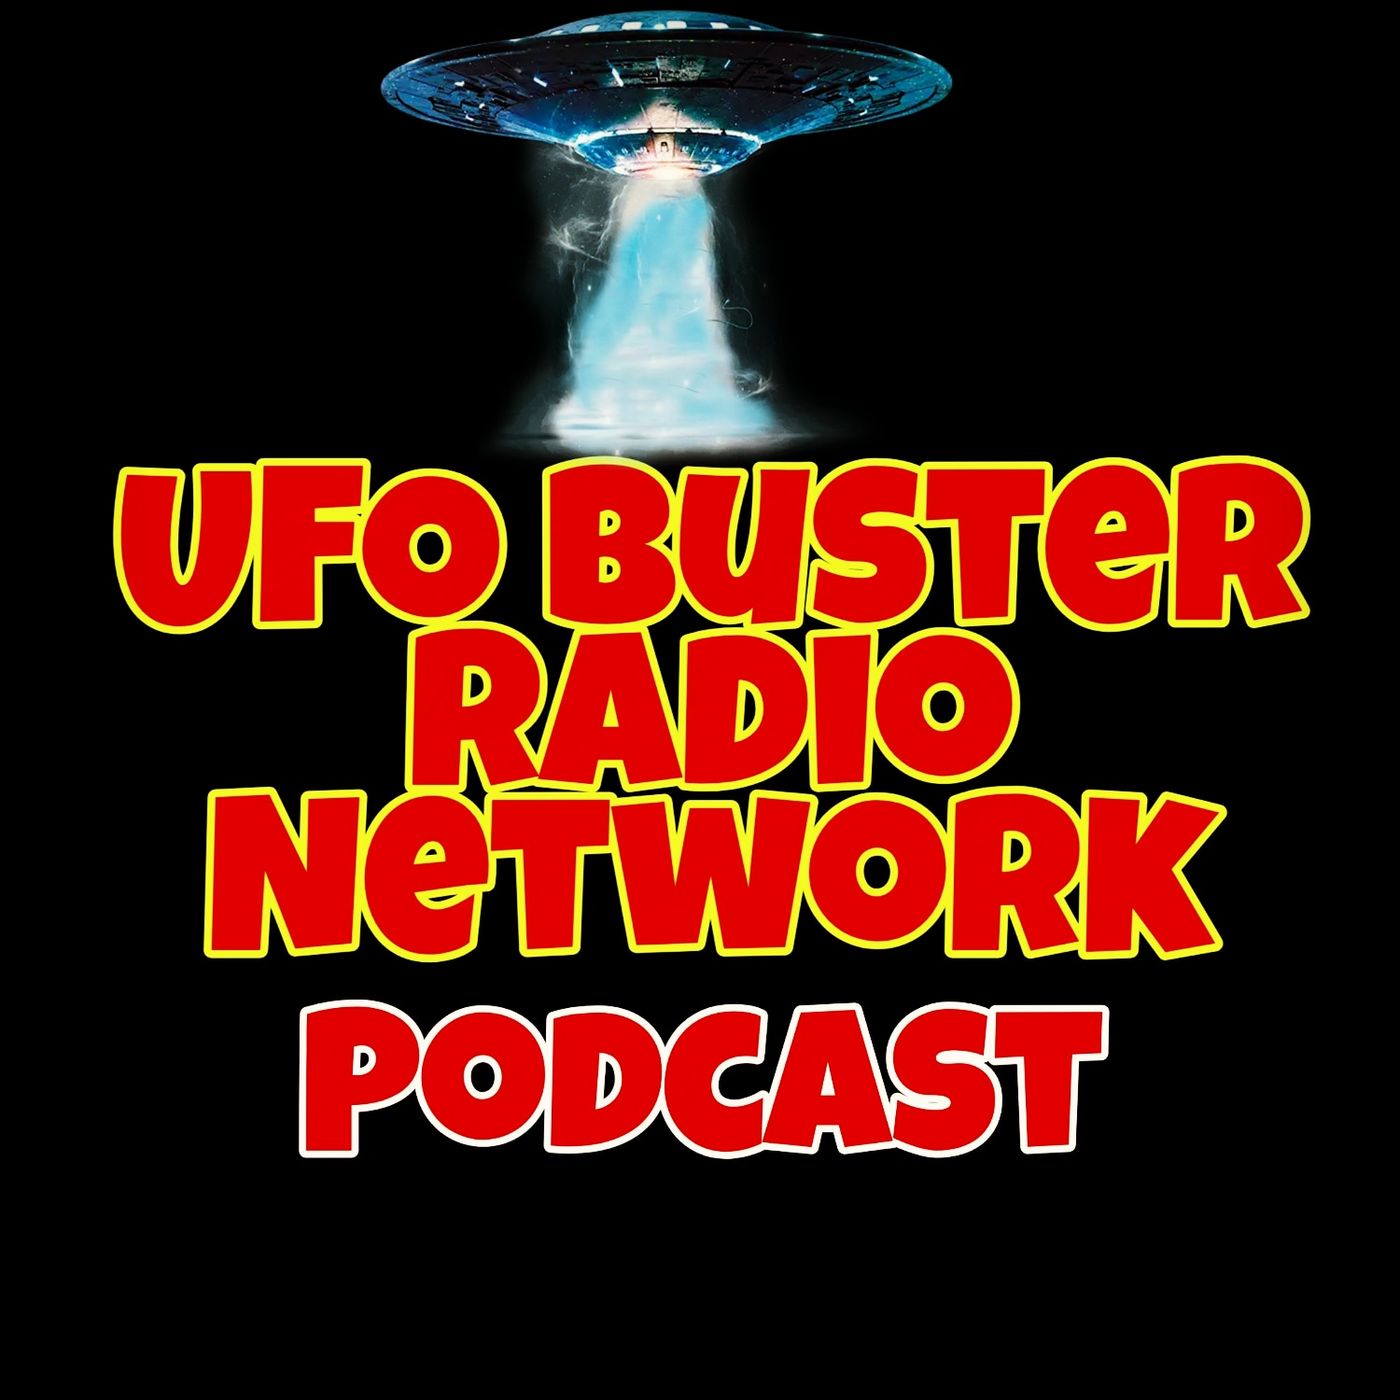 UFO Buster Radio Network